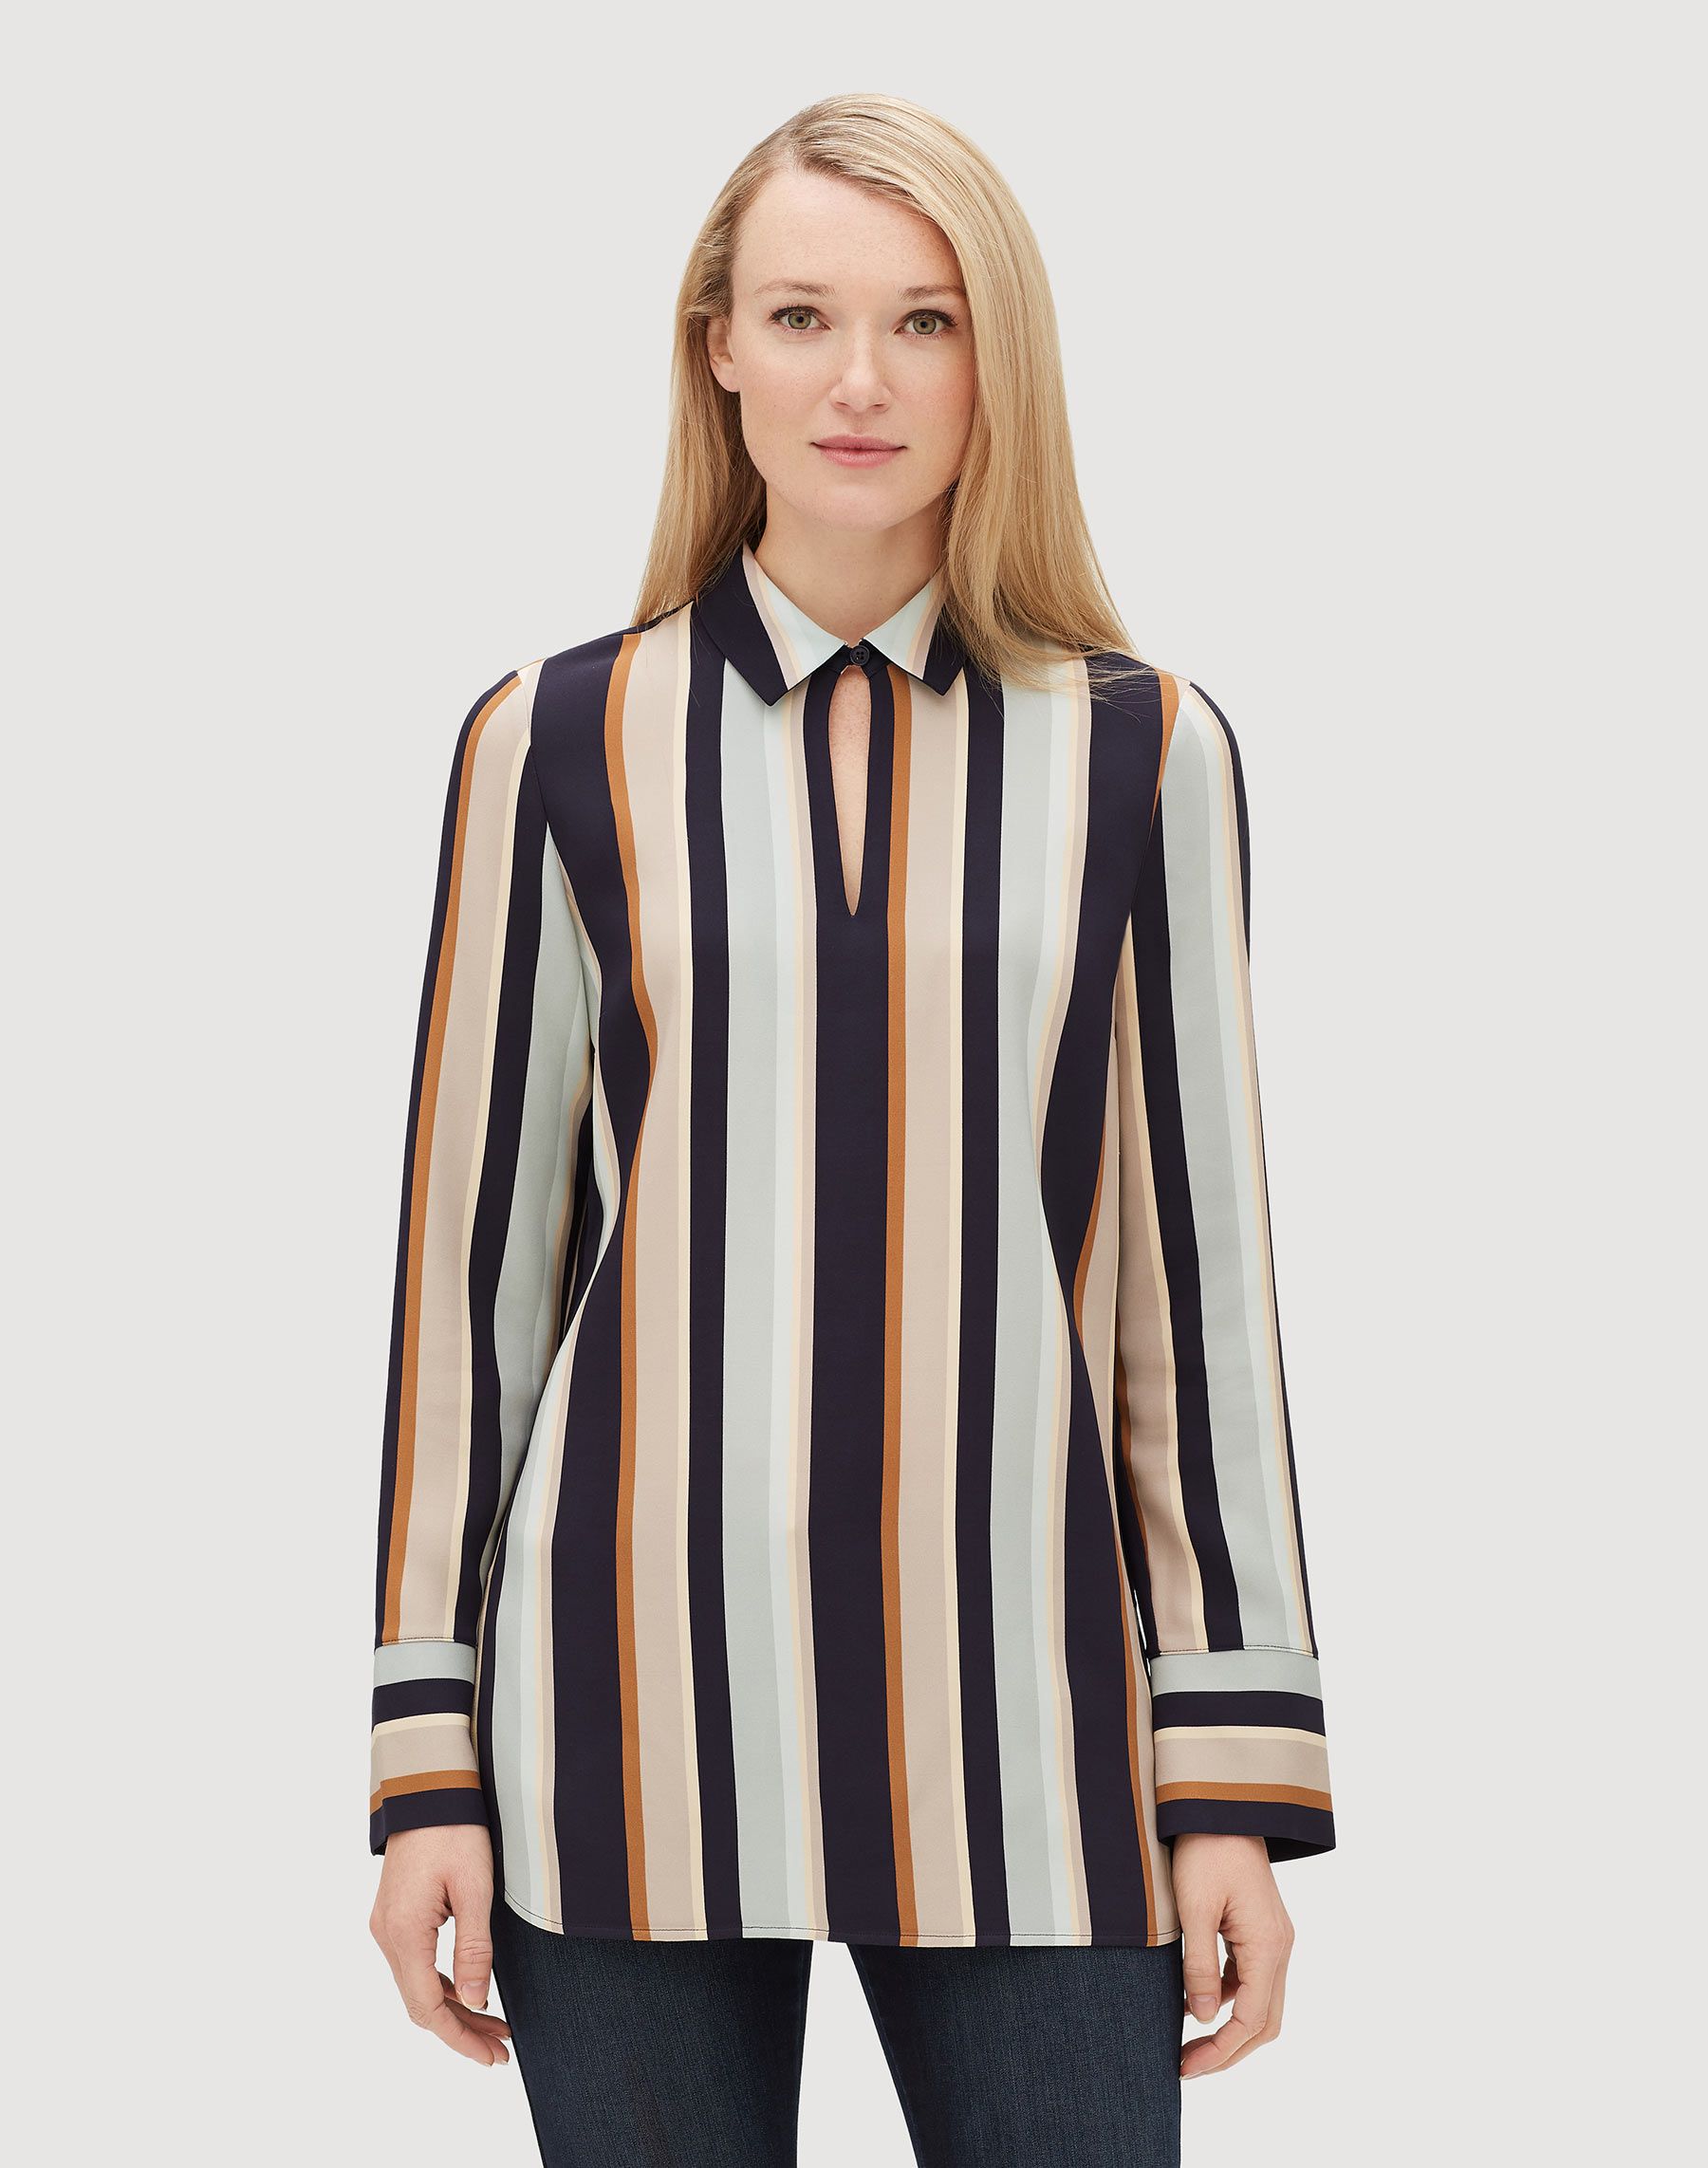 Stripe Shirts - Blouses & Shirts - Shop by Category | Lafayette 148